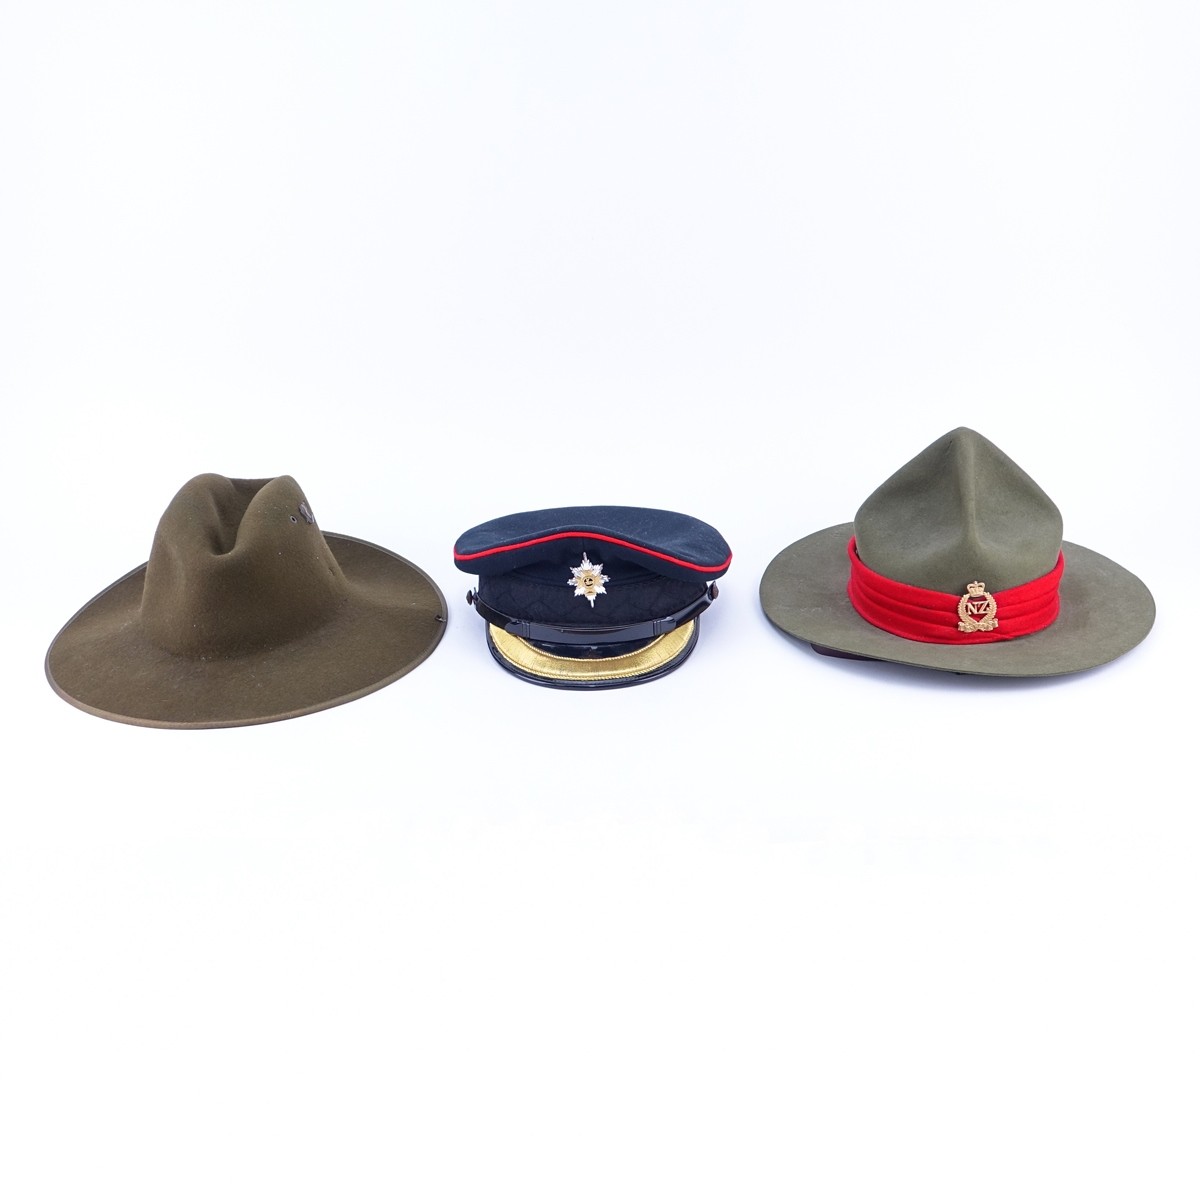 Grouping Of Three (3) Vintage Russian Soviet Hats